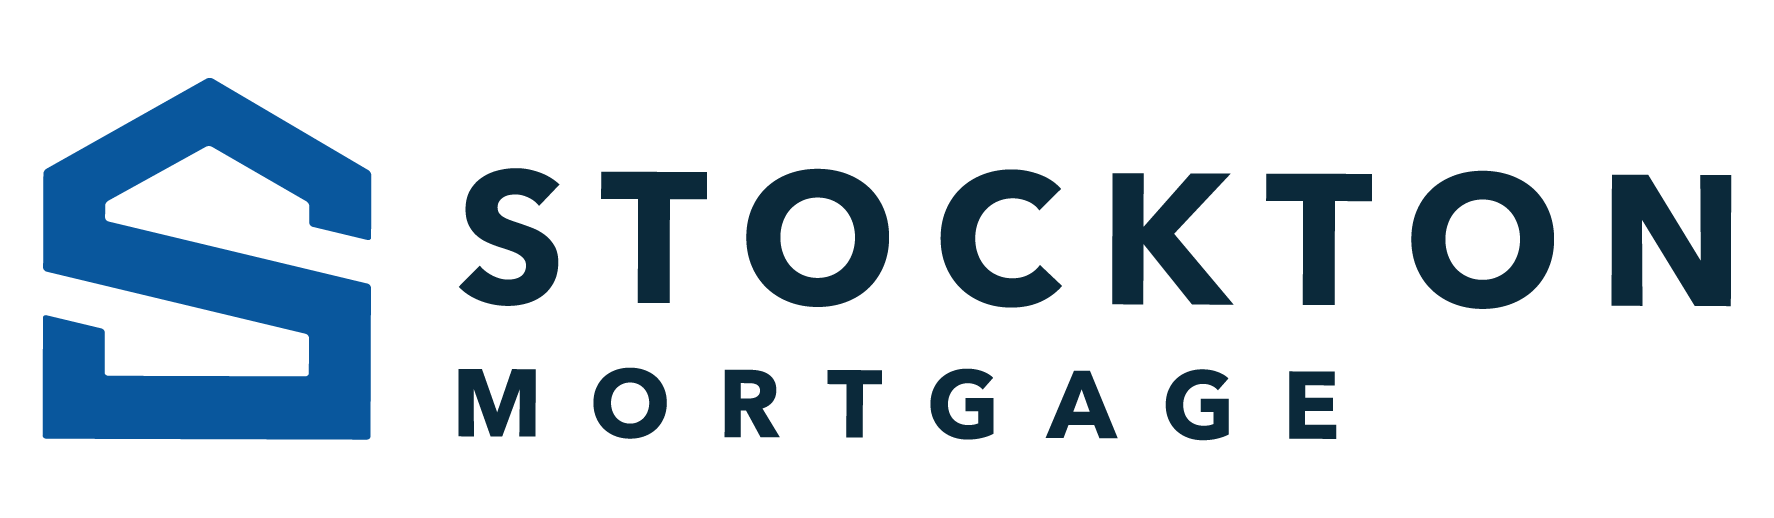 Stockton Mortgage logo